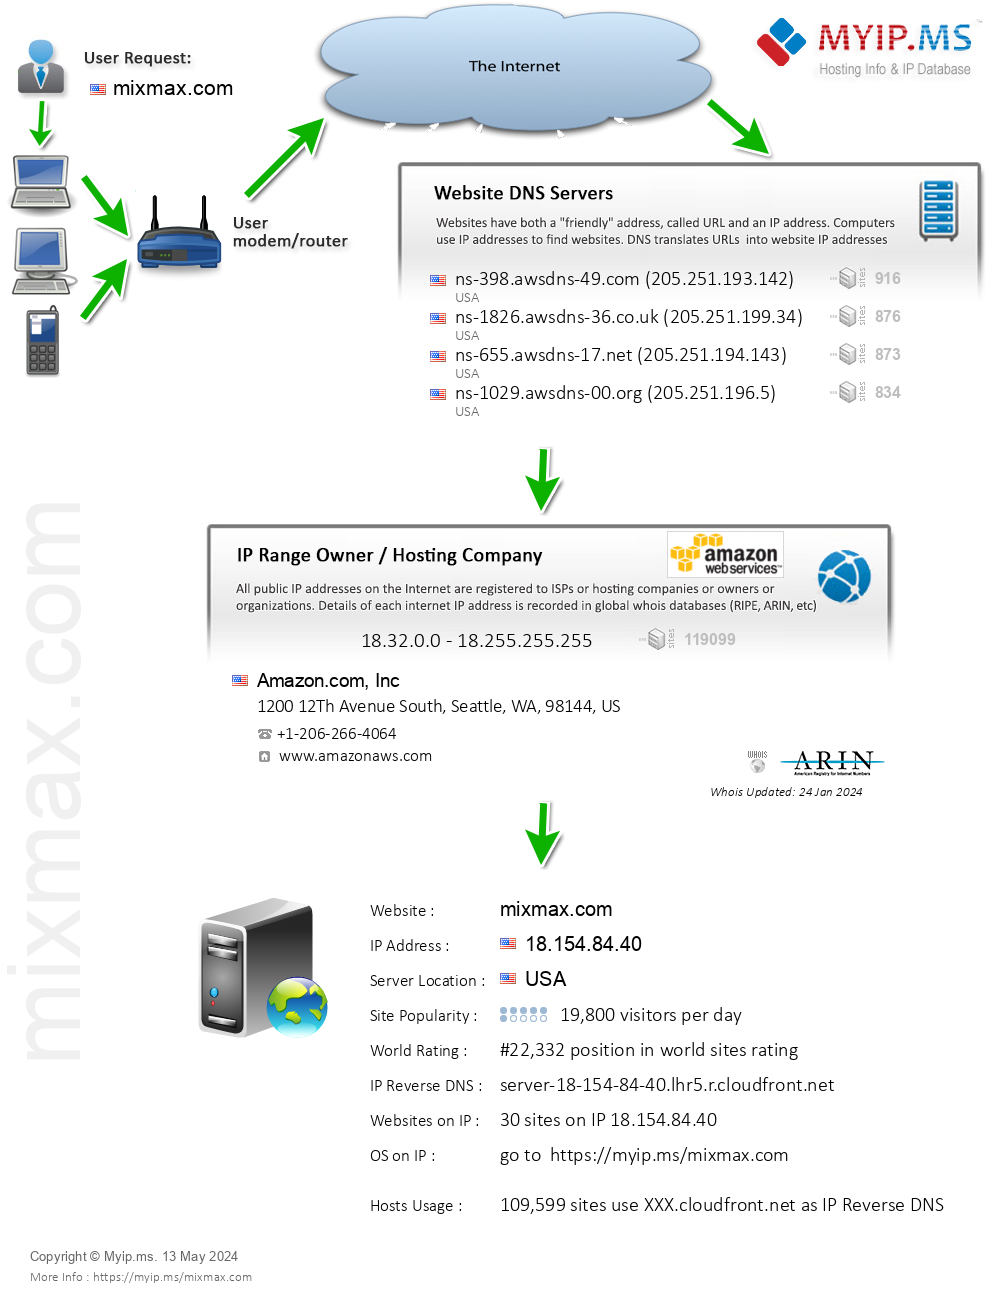 Mixmax.com - Website Hosting Visual IP Diagram